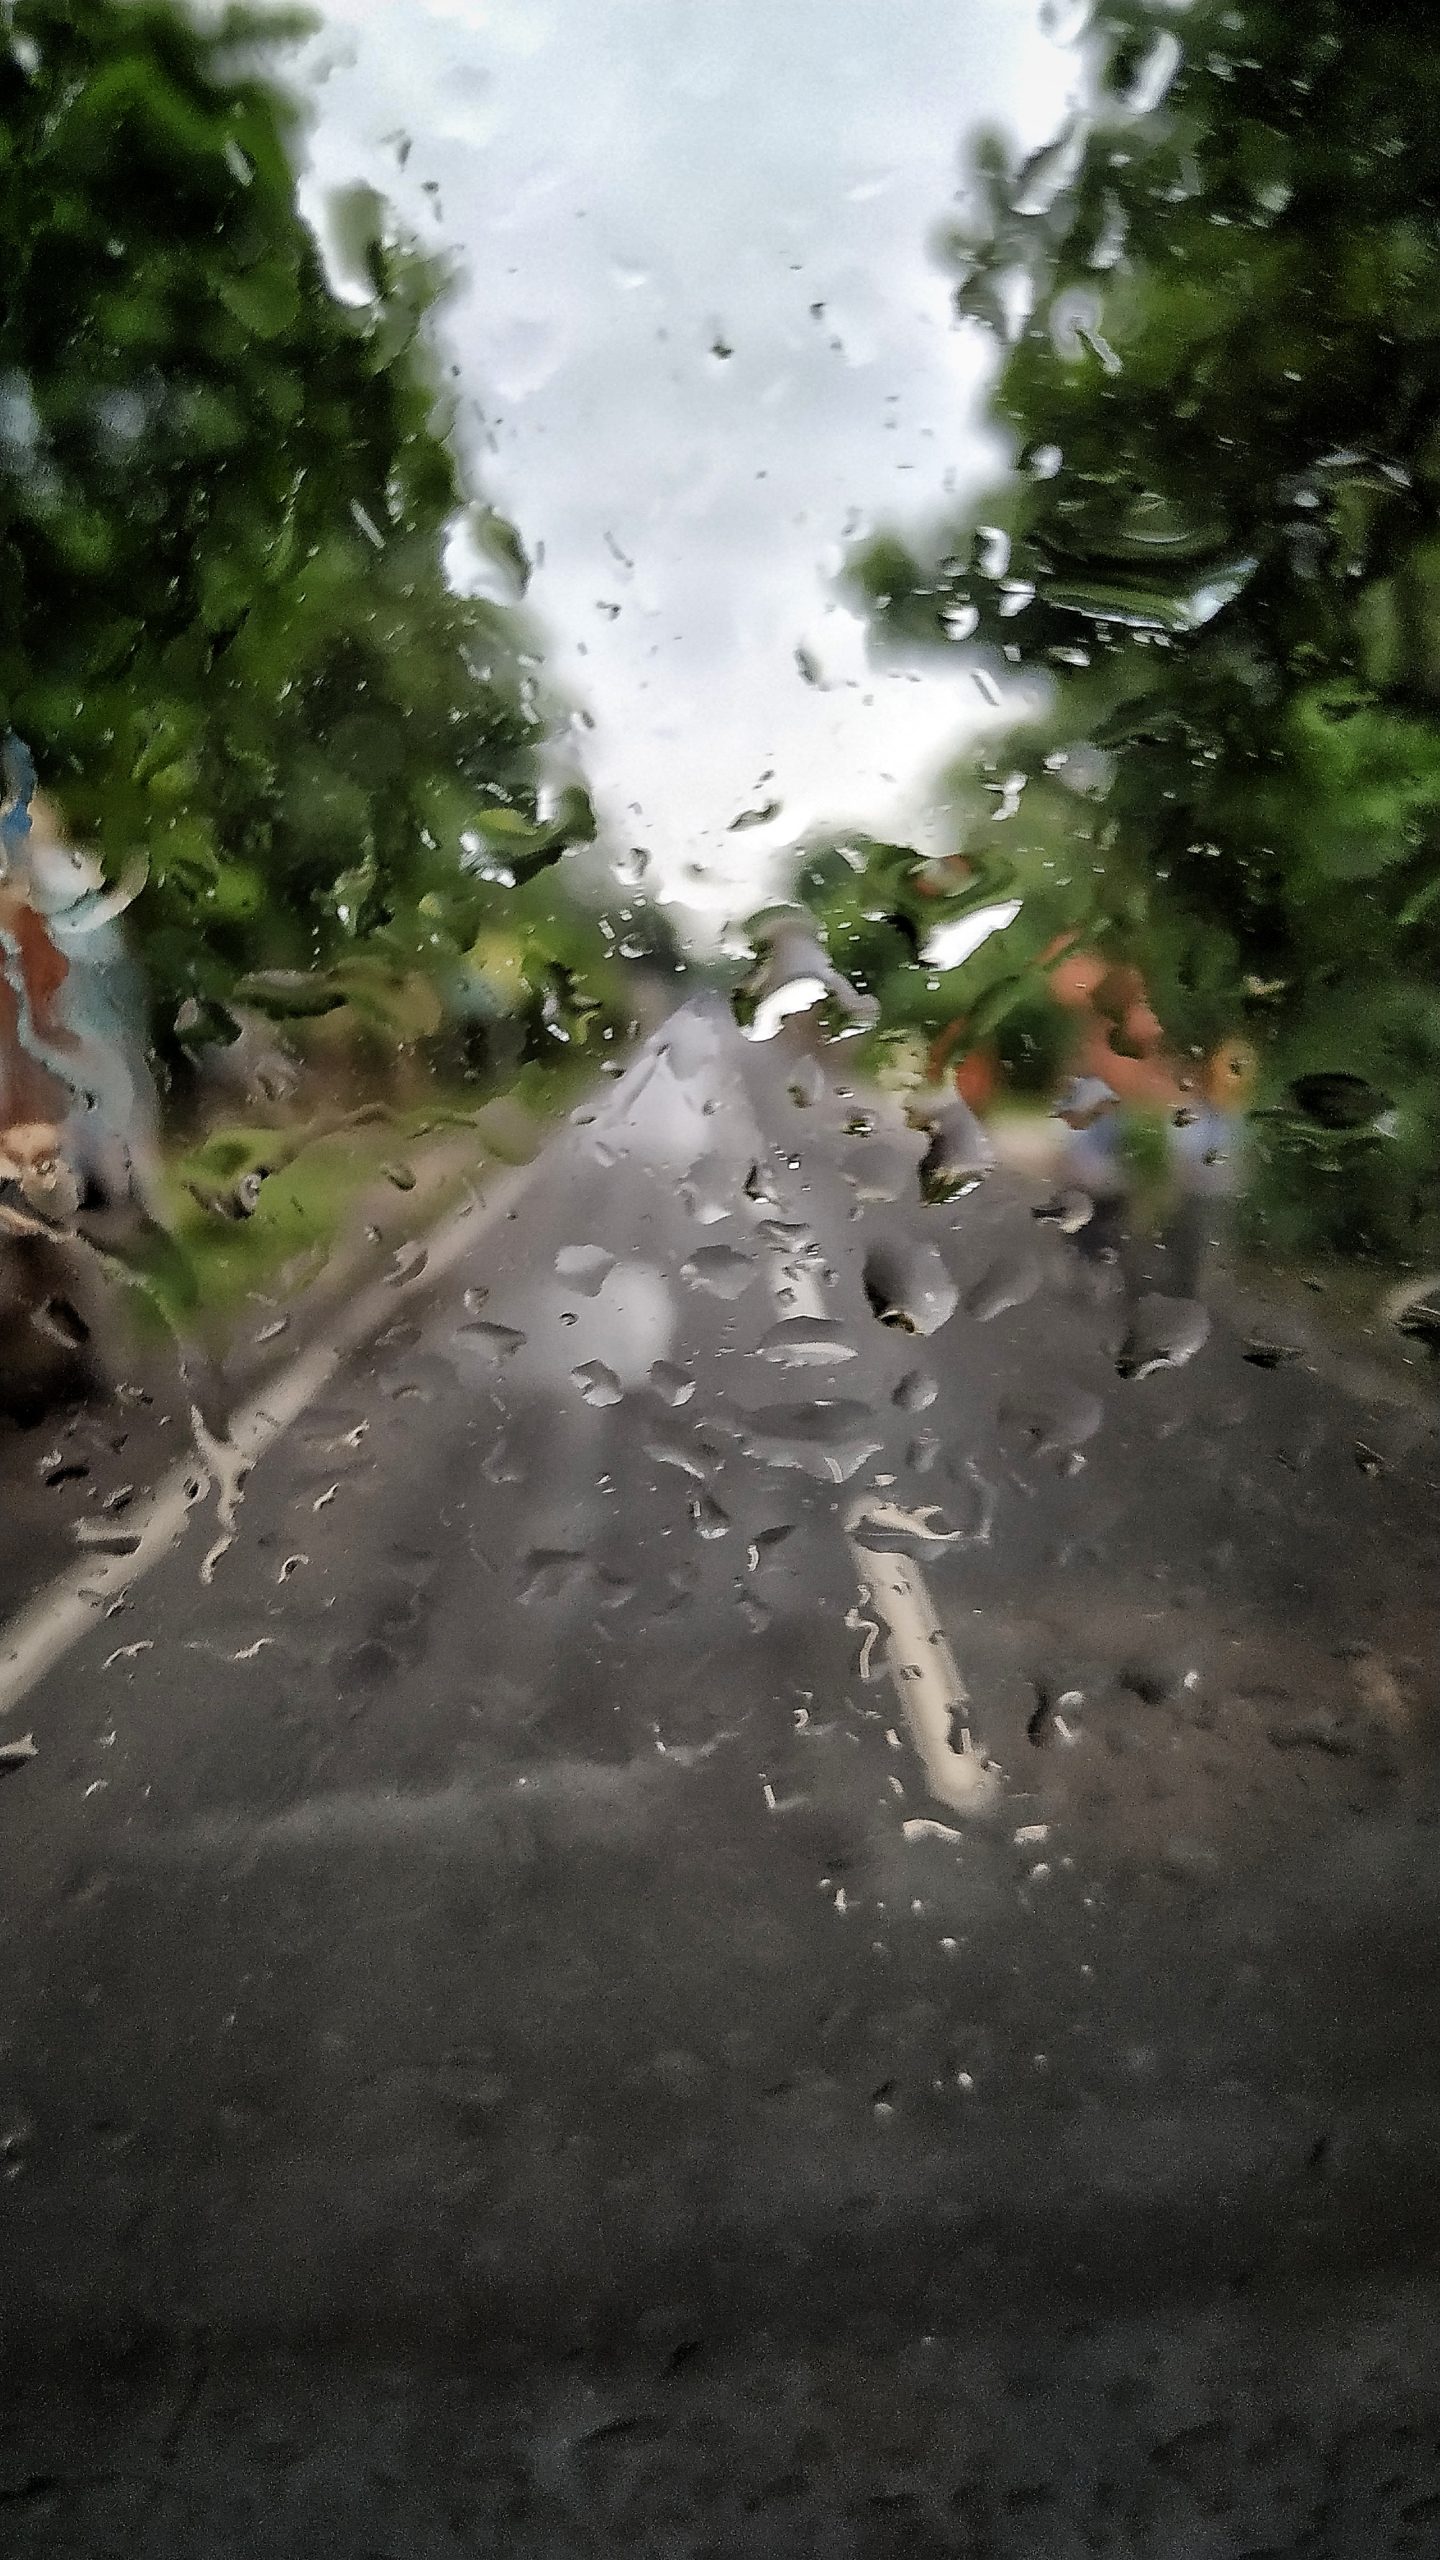 Rain drops on windshield